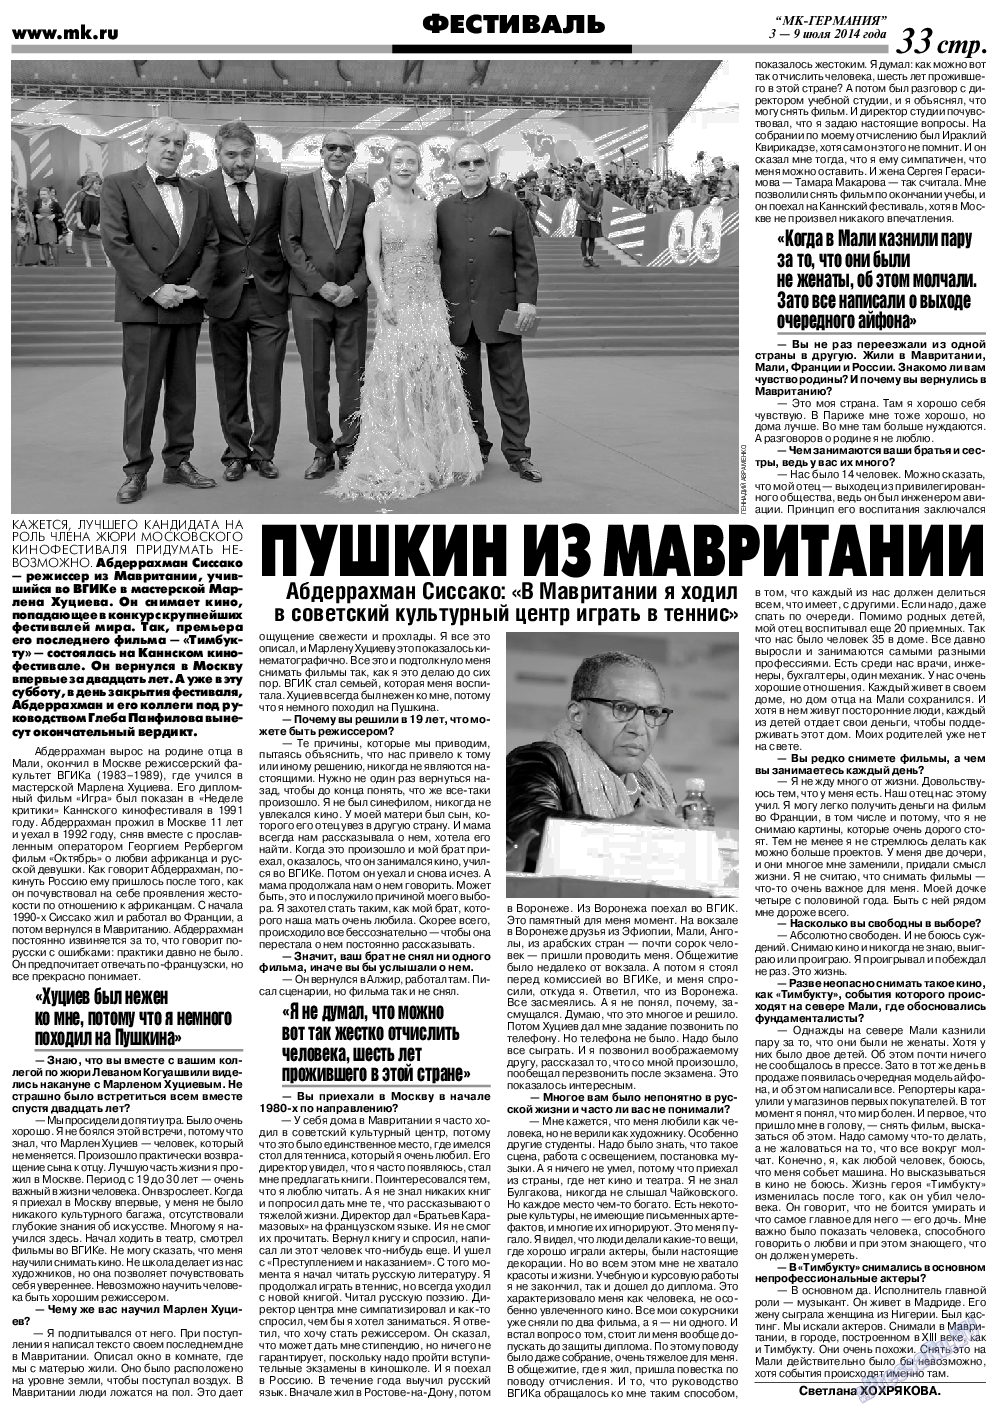 МК-Германия, газета. 2014 №27 стр.33